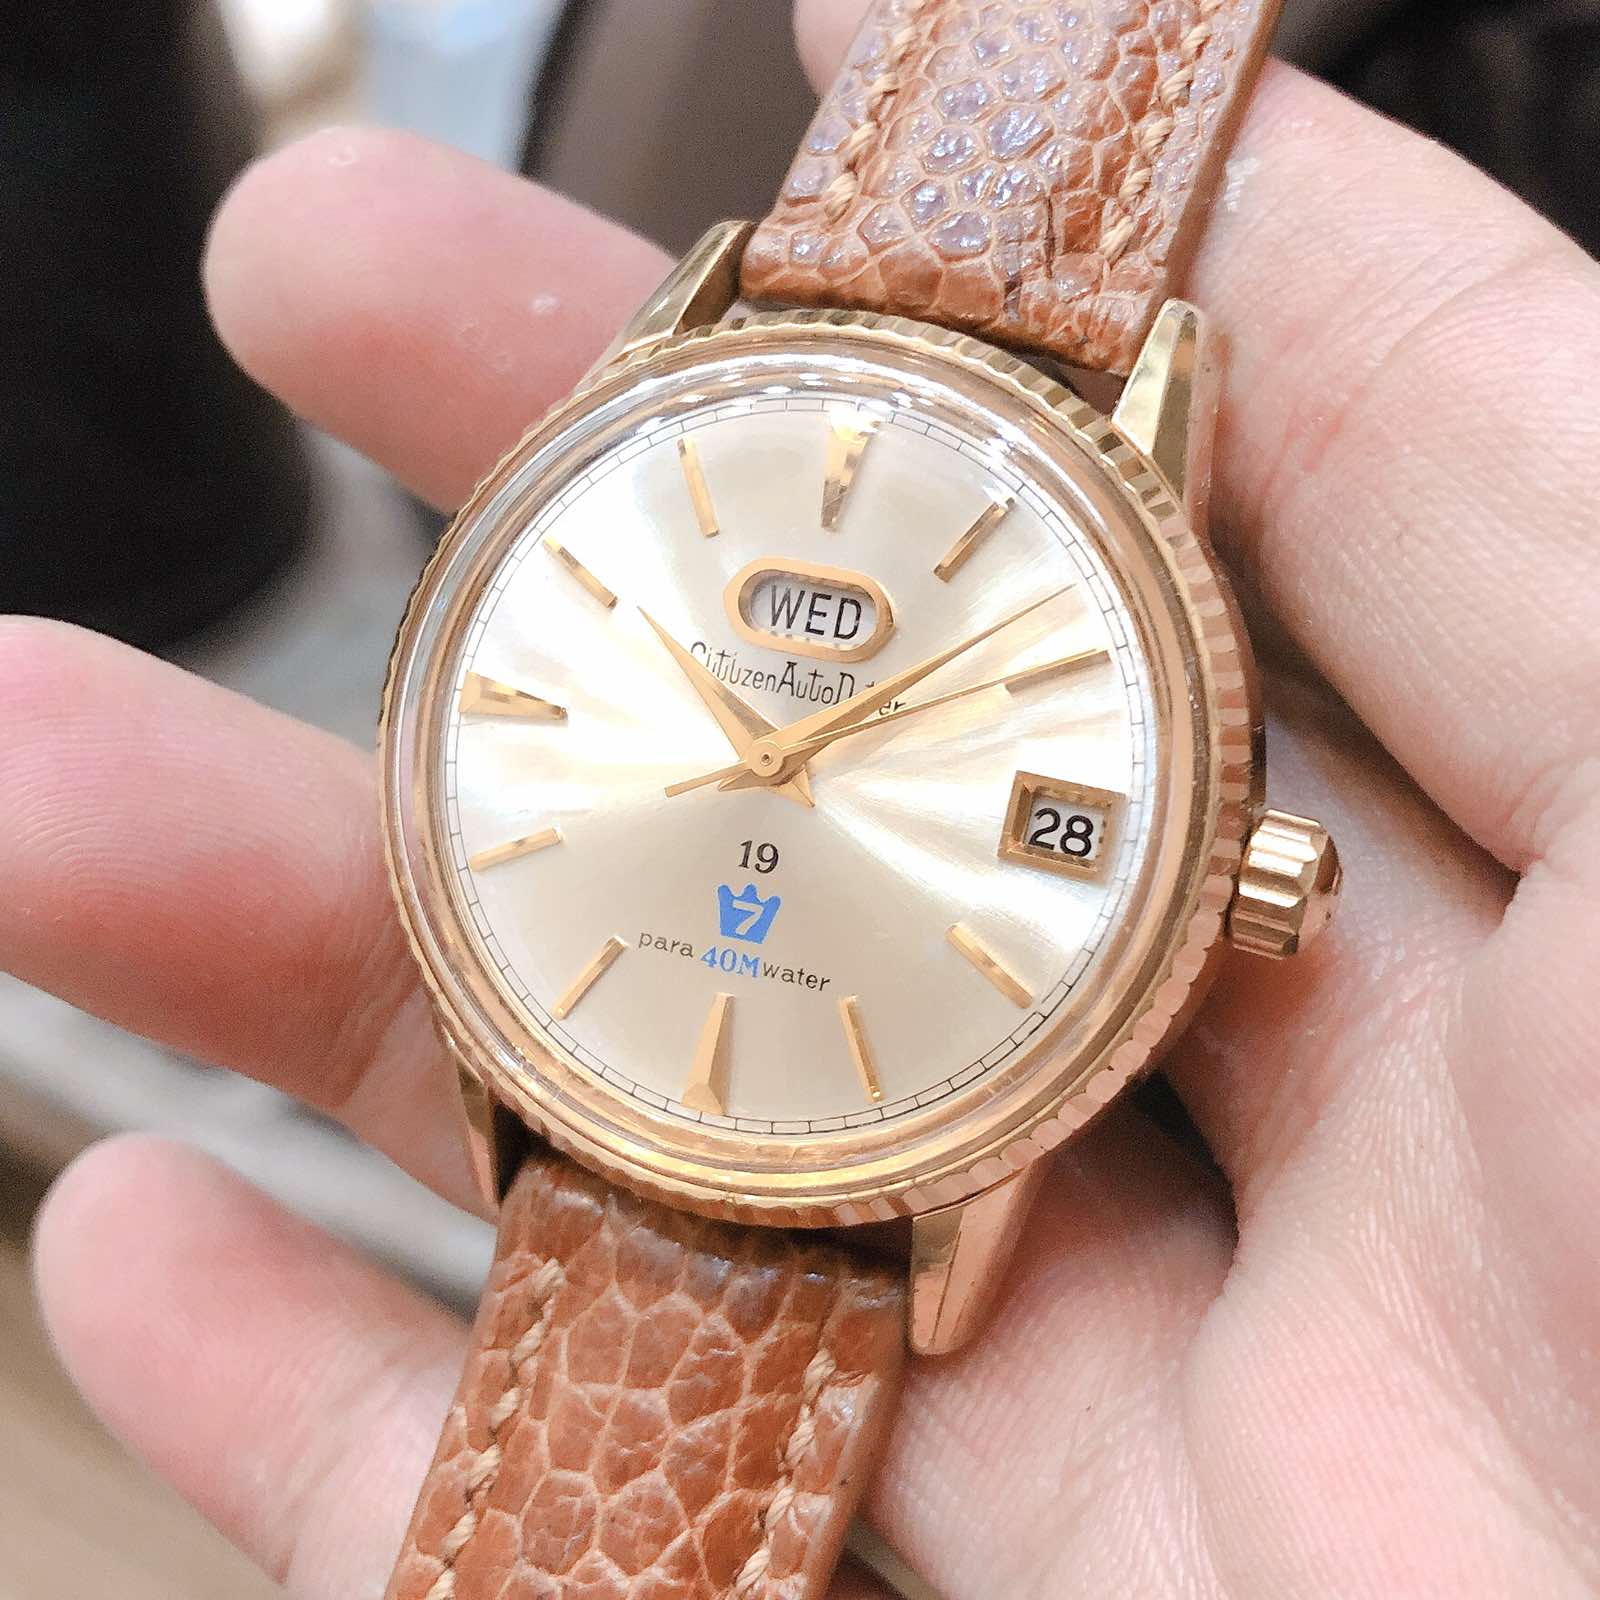 Đồng hồ cổ CITIZEN autoDater chính hãng nhật bản